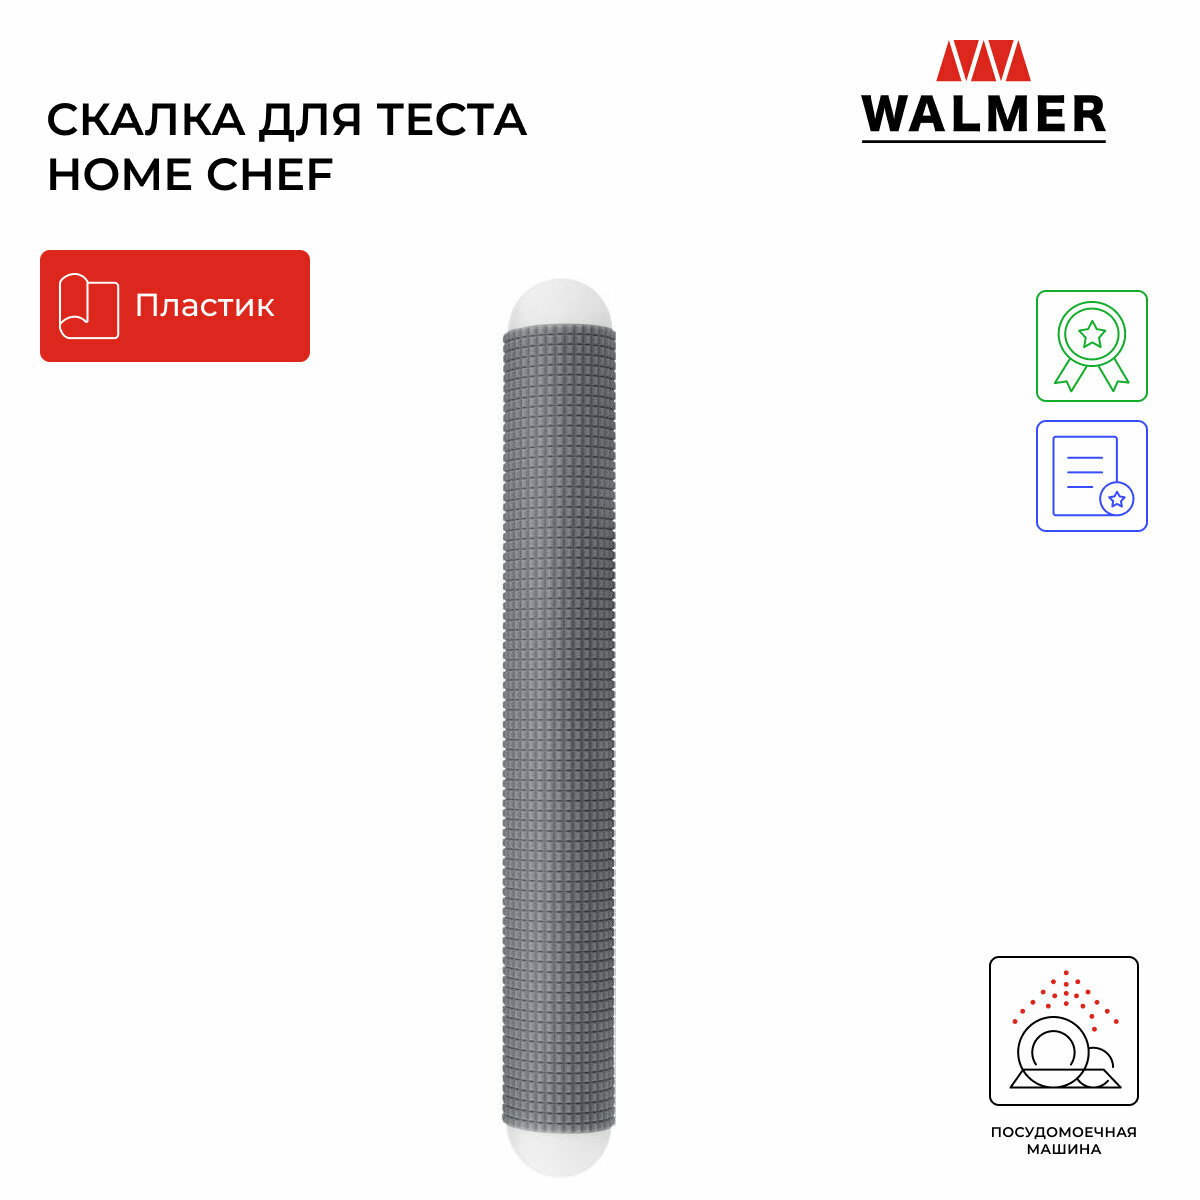 Скалка для теста рельефная Walmer Home Chef, 27 см, цвет серый